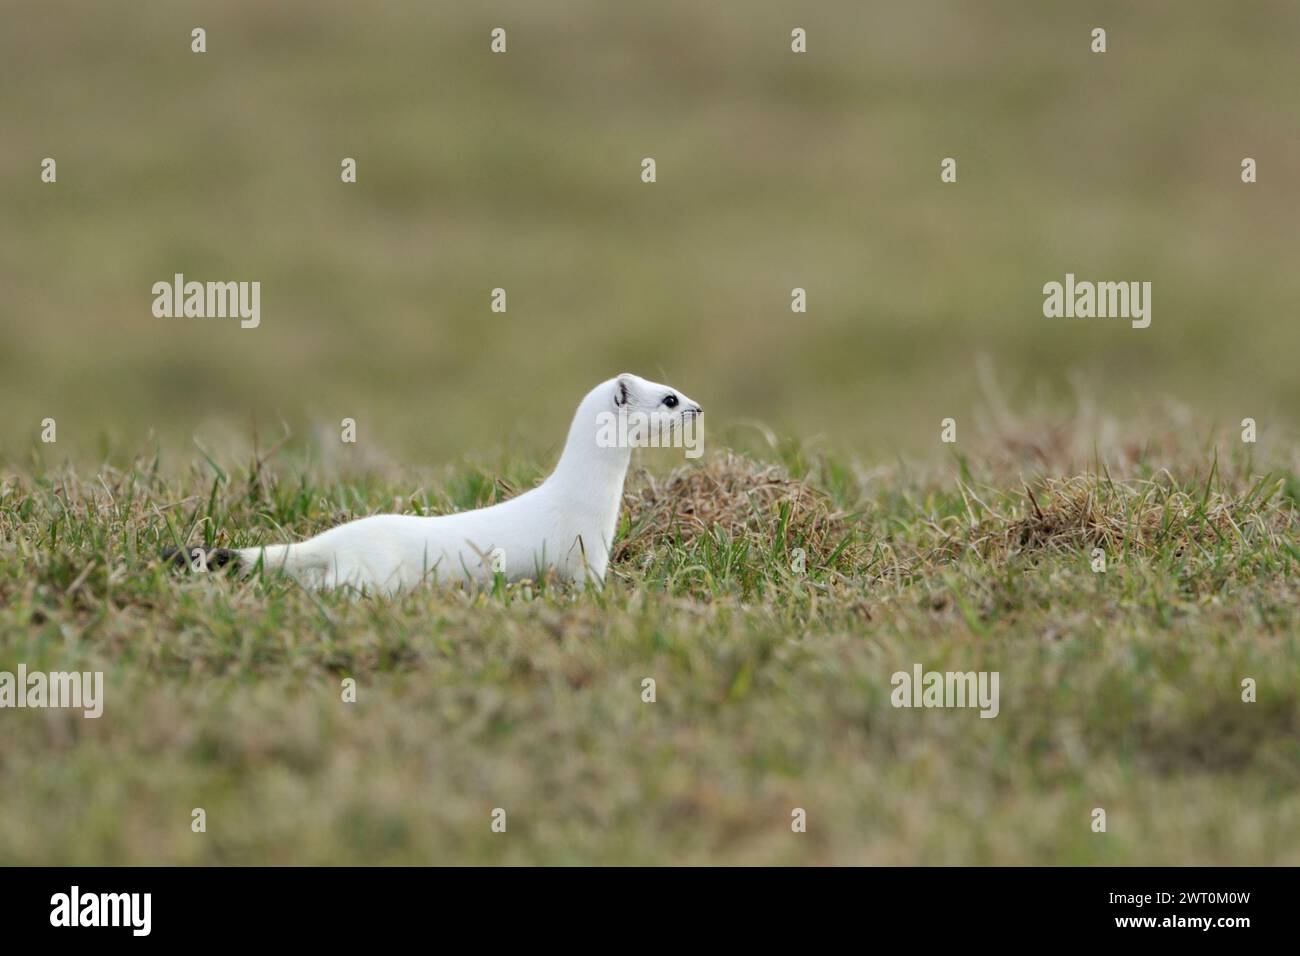 a la caza... Ermine / Stoat ( Mustela erminea ) en abrigo blanco de invierno en un pasto, prado, animal nativo, vida silvestre, Europa. Foto de stock